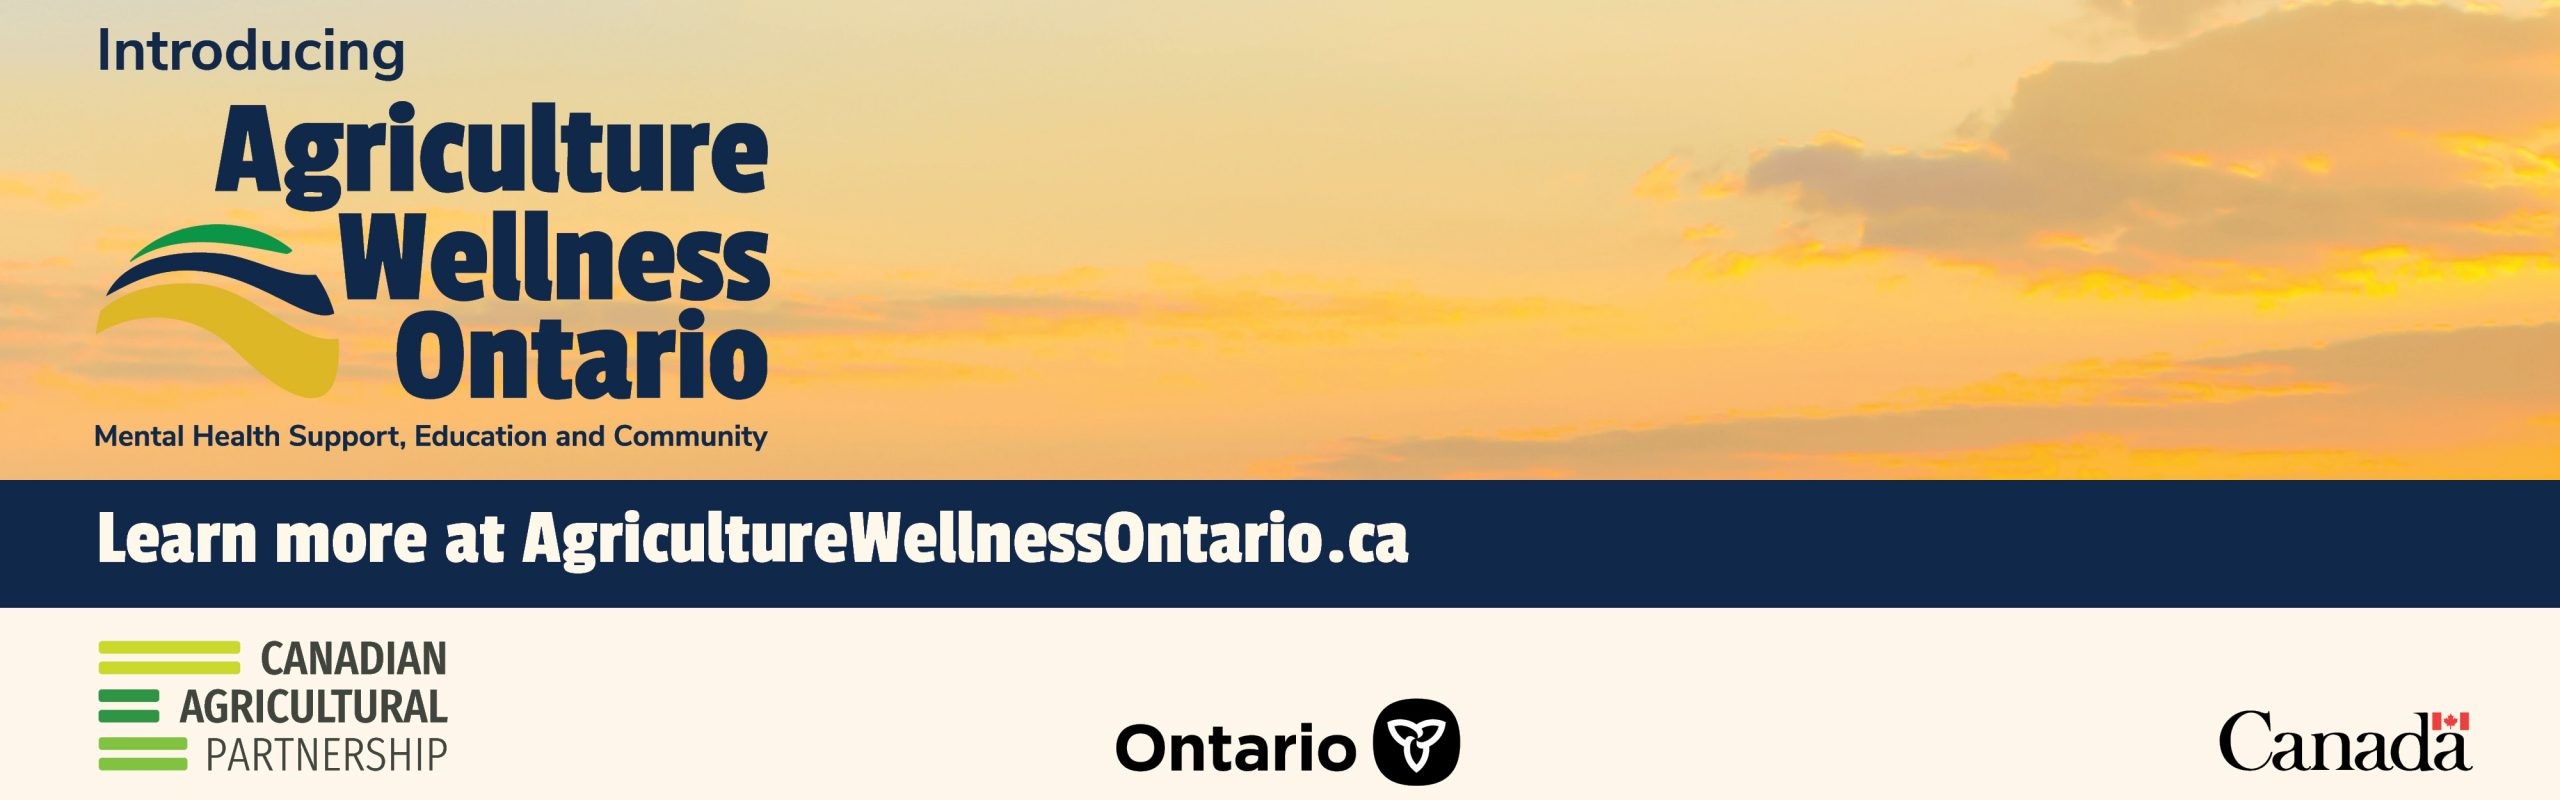 Agriculture Wellness Ontario banner EN